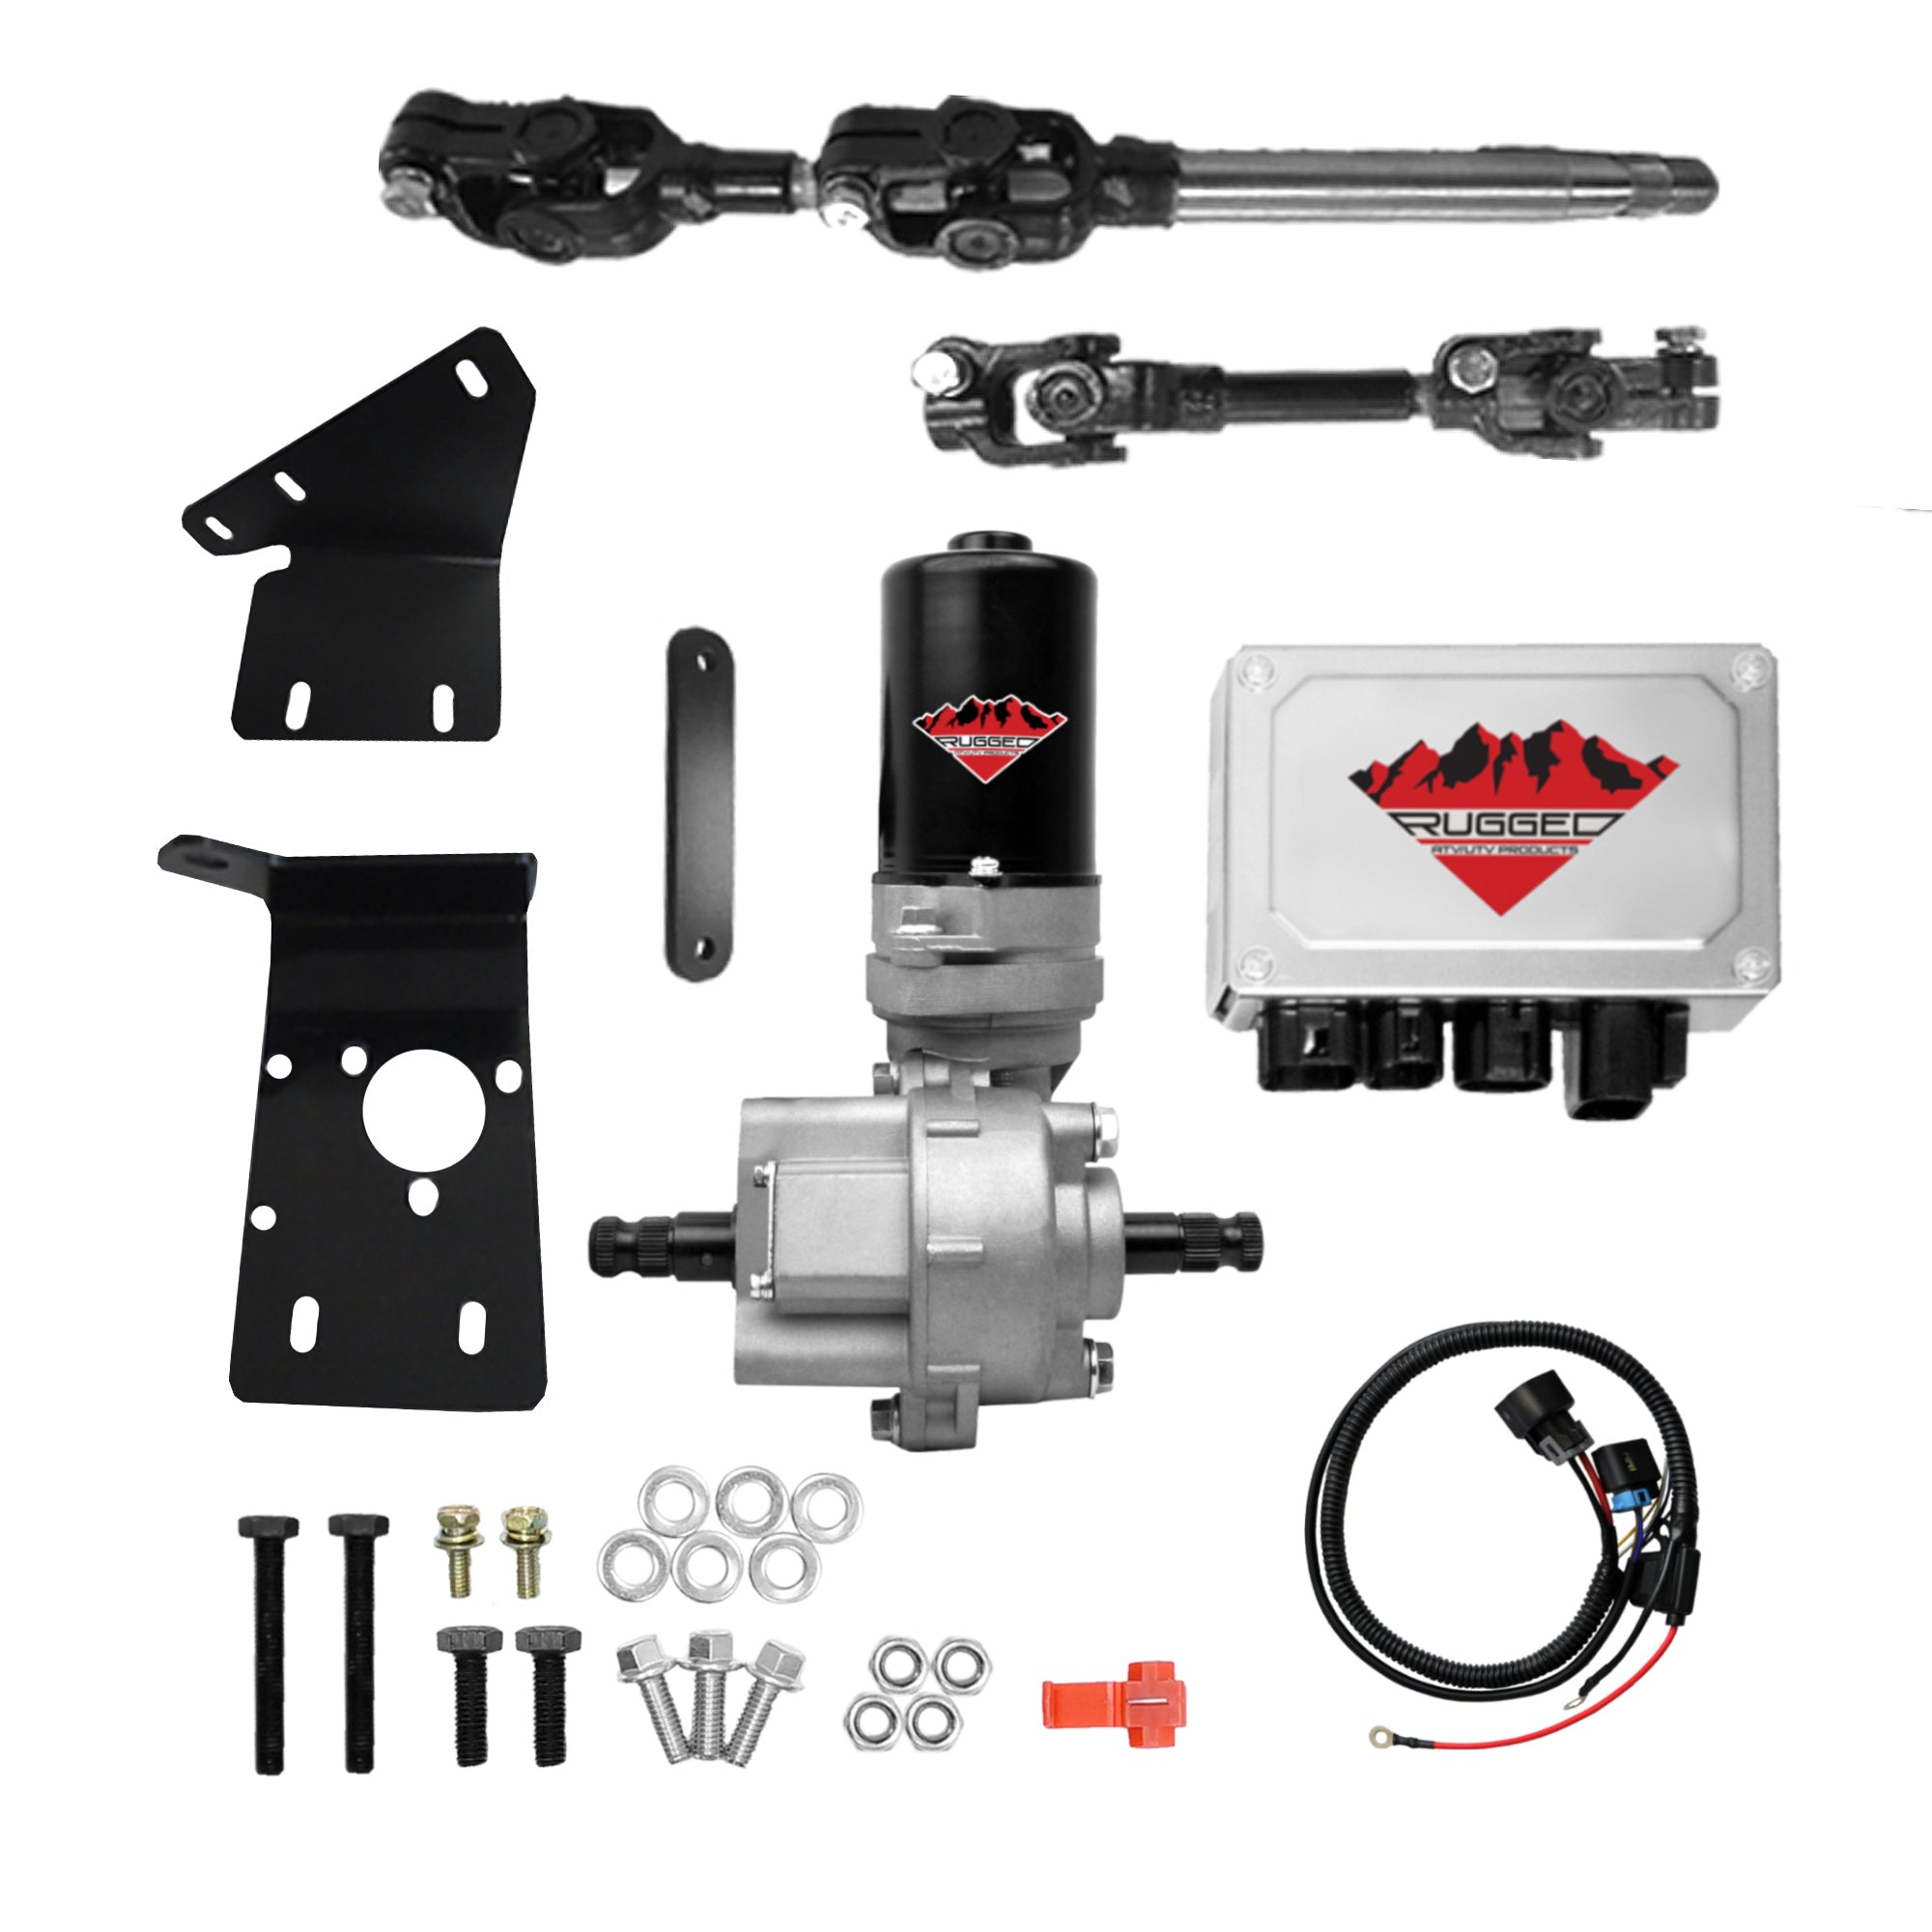 Electric Power Steering Kit for Polaris RZR 570 